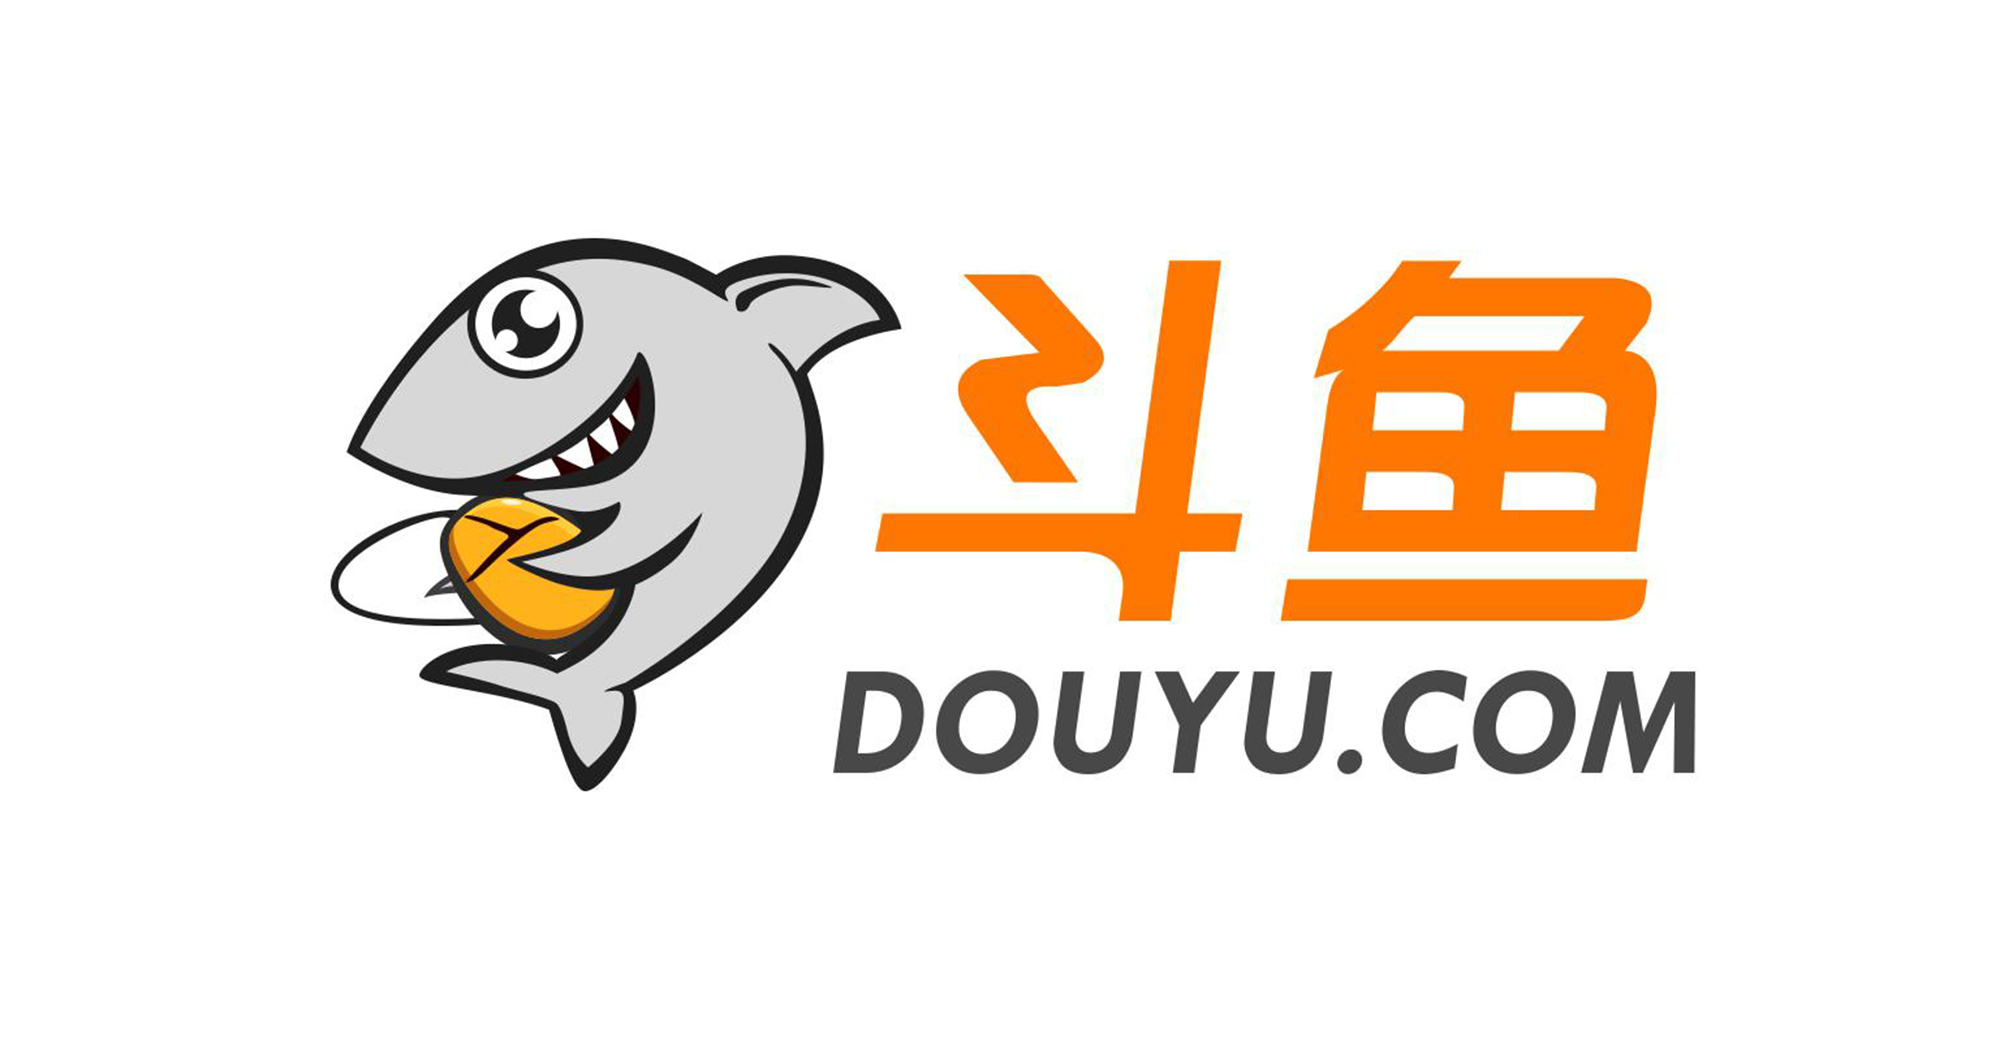 Douyu Reports Q1 Revenue of 1.04 Billion RMB, a Year-on-Year Decrease of 29.9%